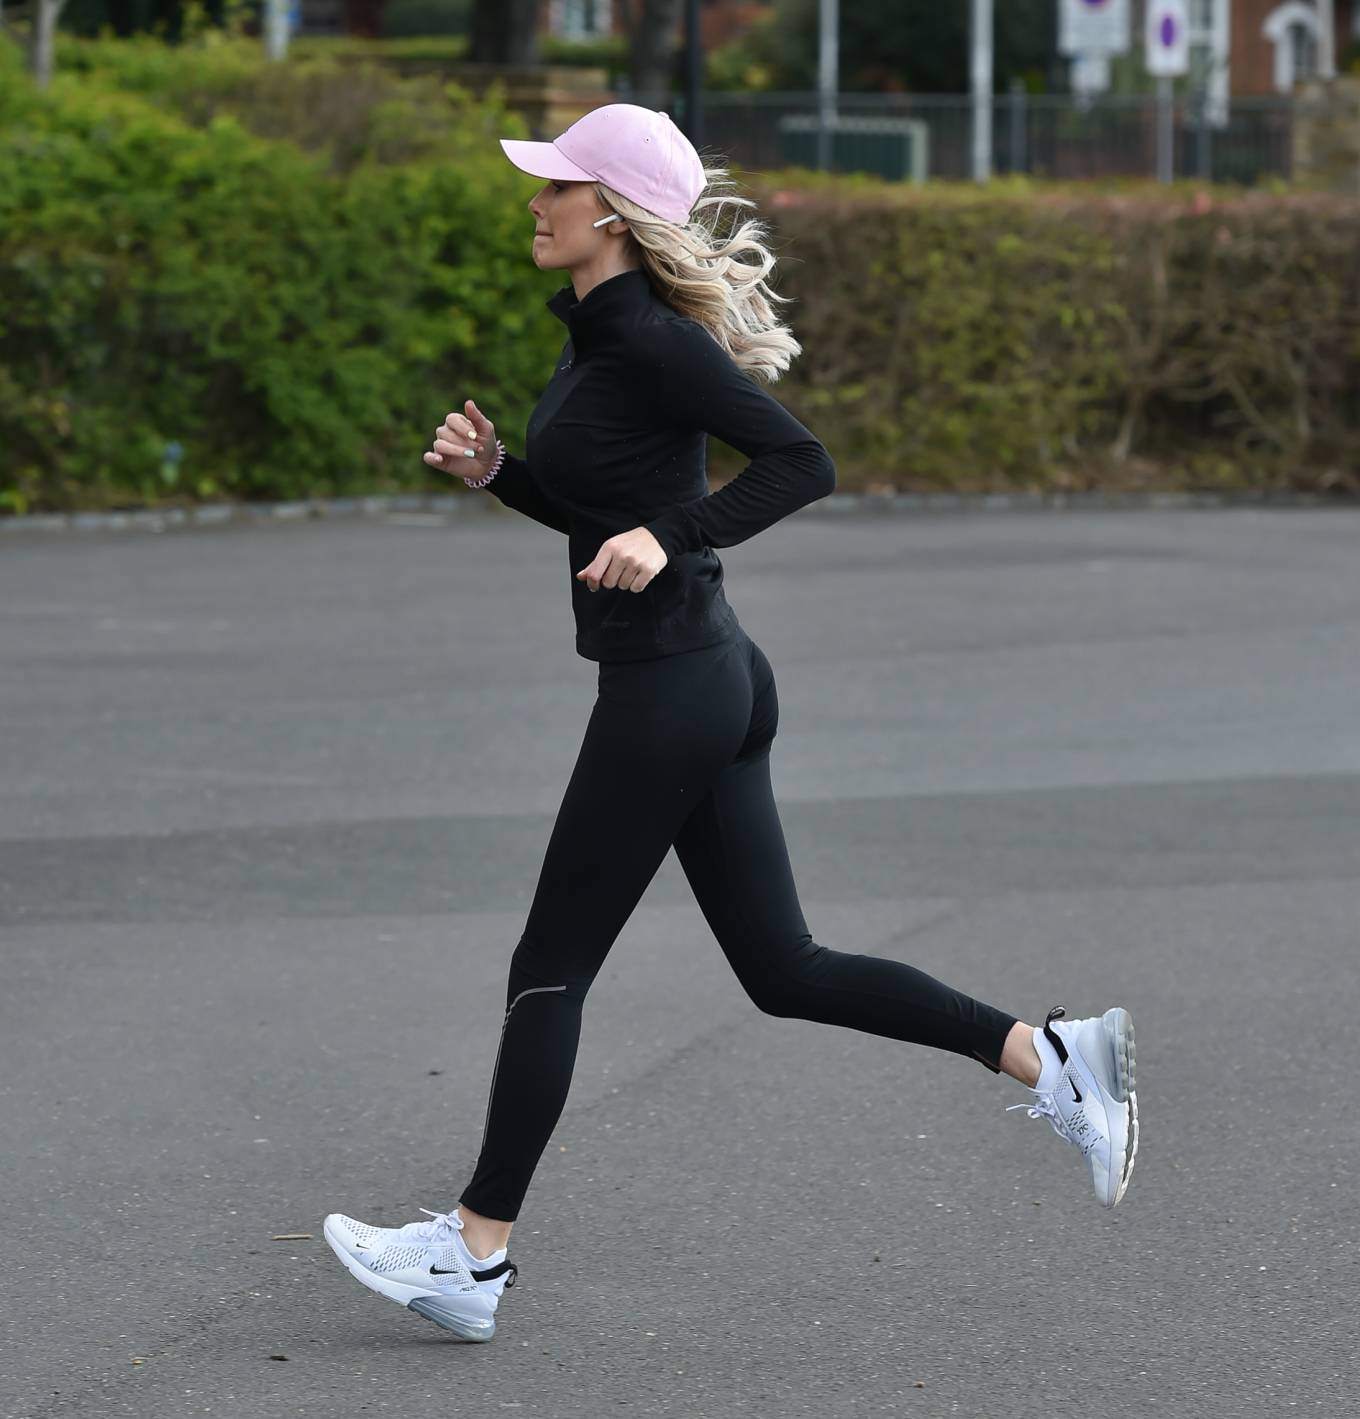 Laura Anderson â€“ Jogging During Coronavirus Lockdown